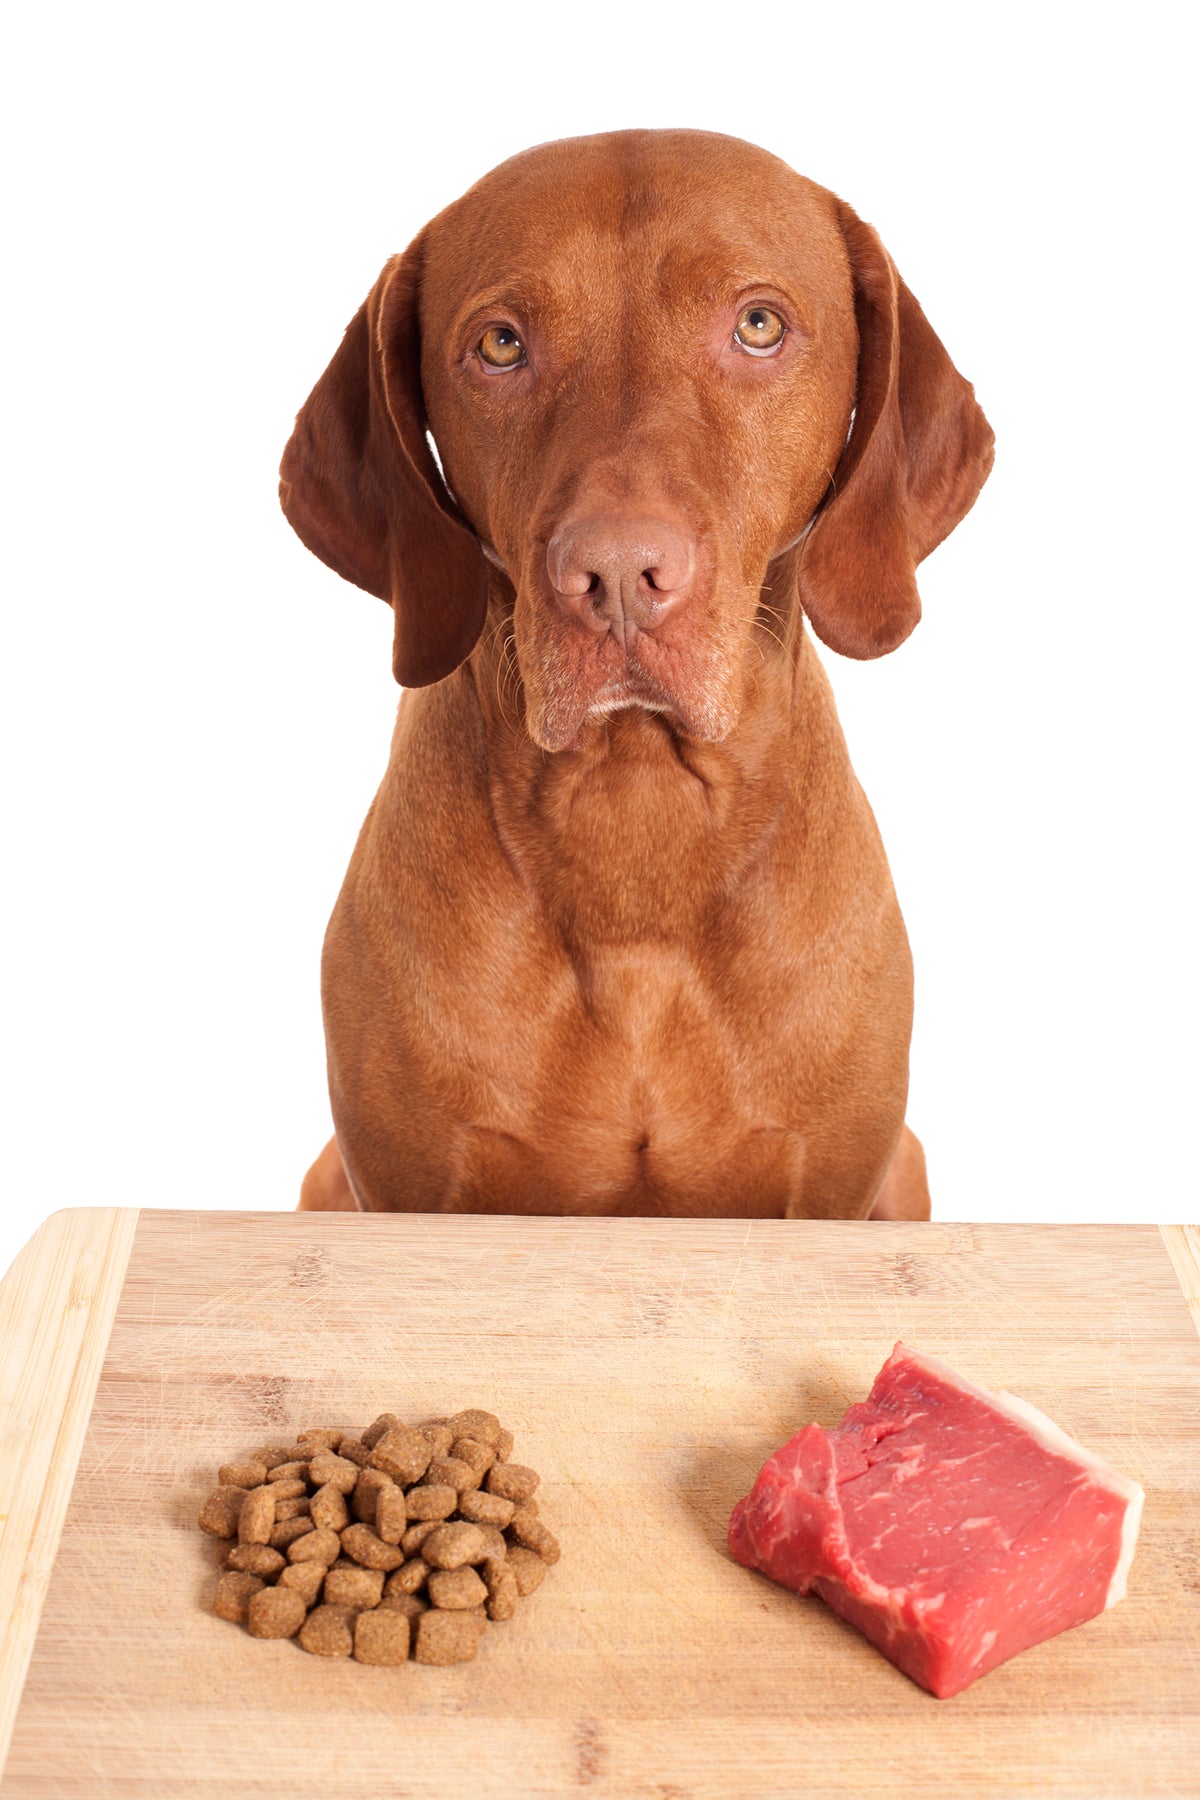 Should I Change Dog Supplements When I Change My Dog's Food?